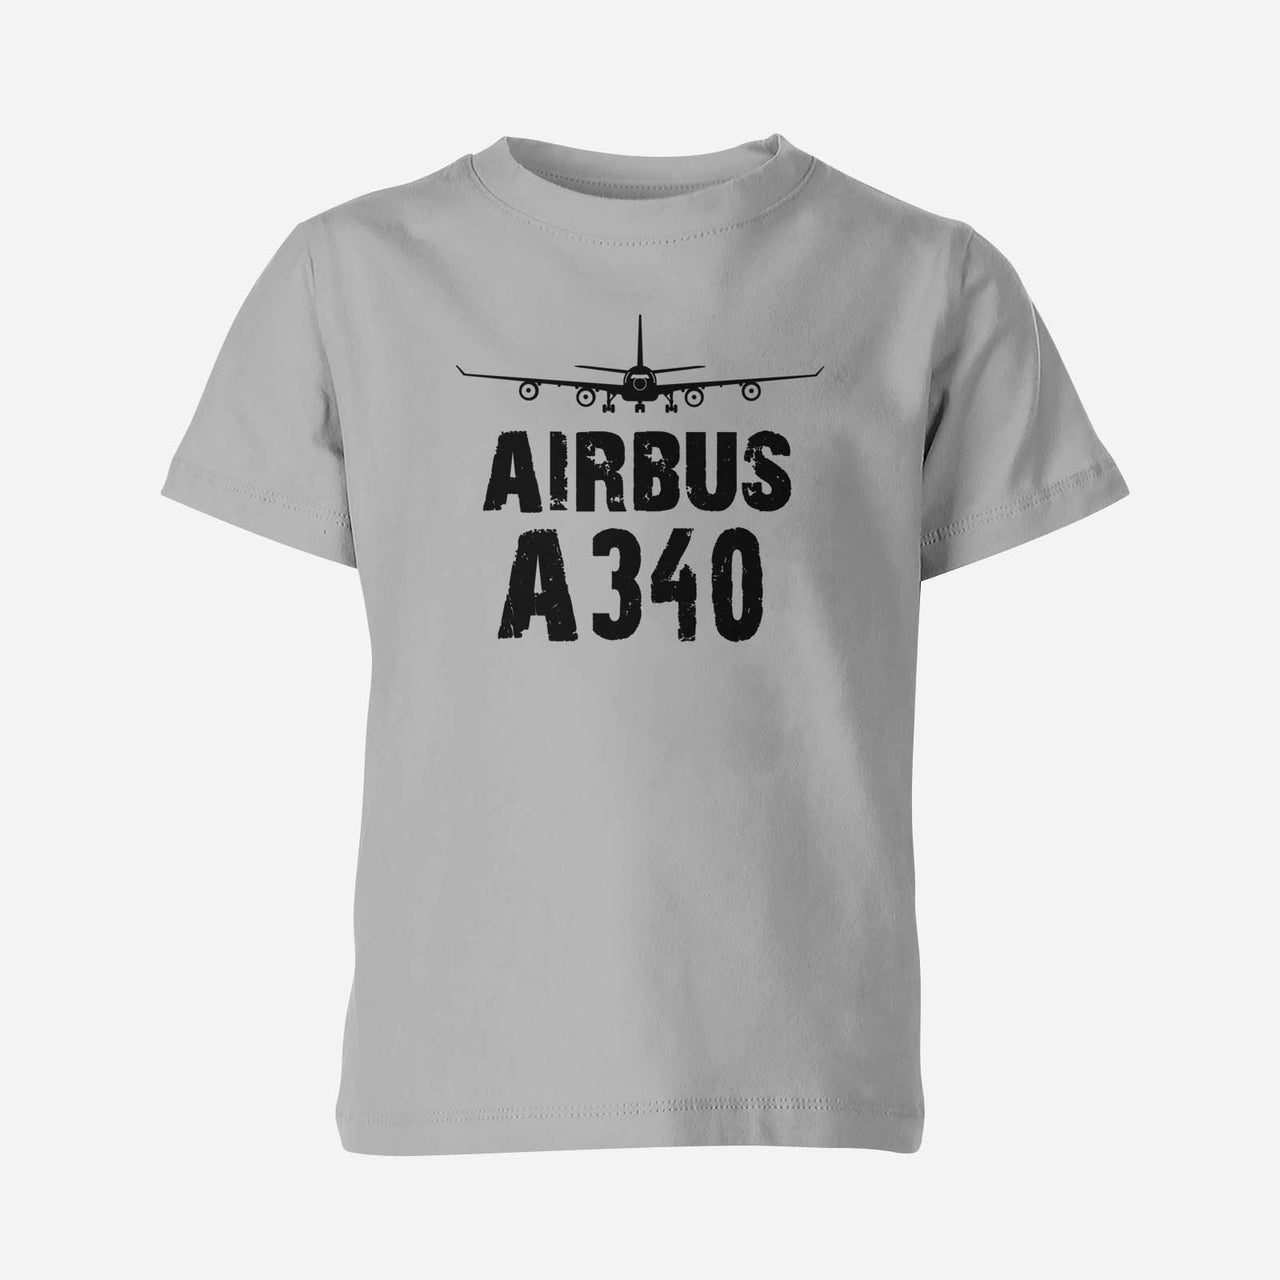 Airbus A340 & Plane Designed Children T-Shirts